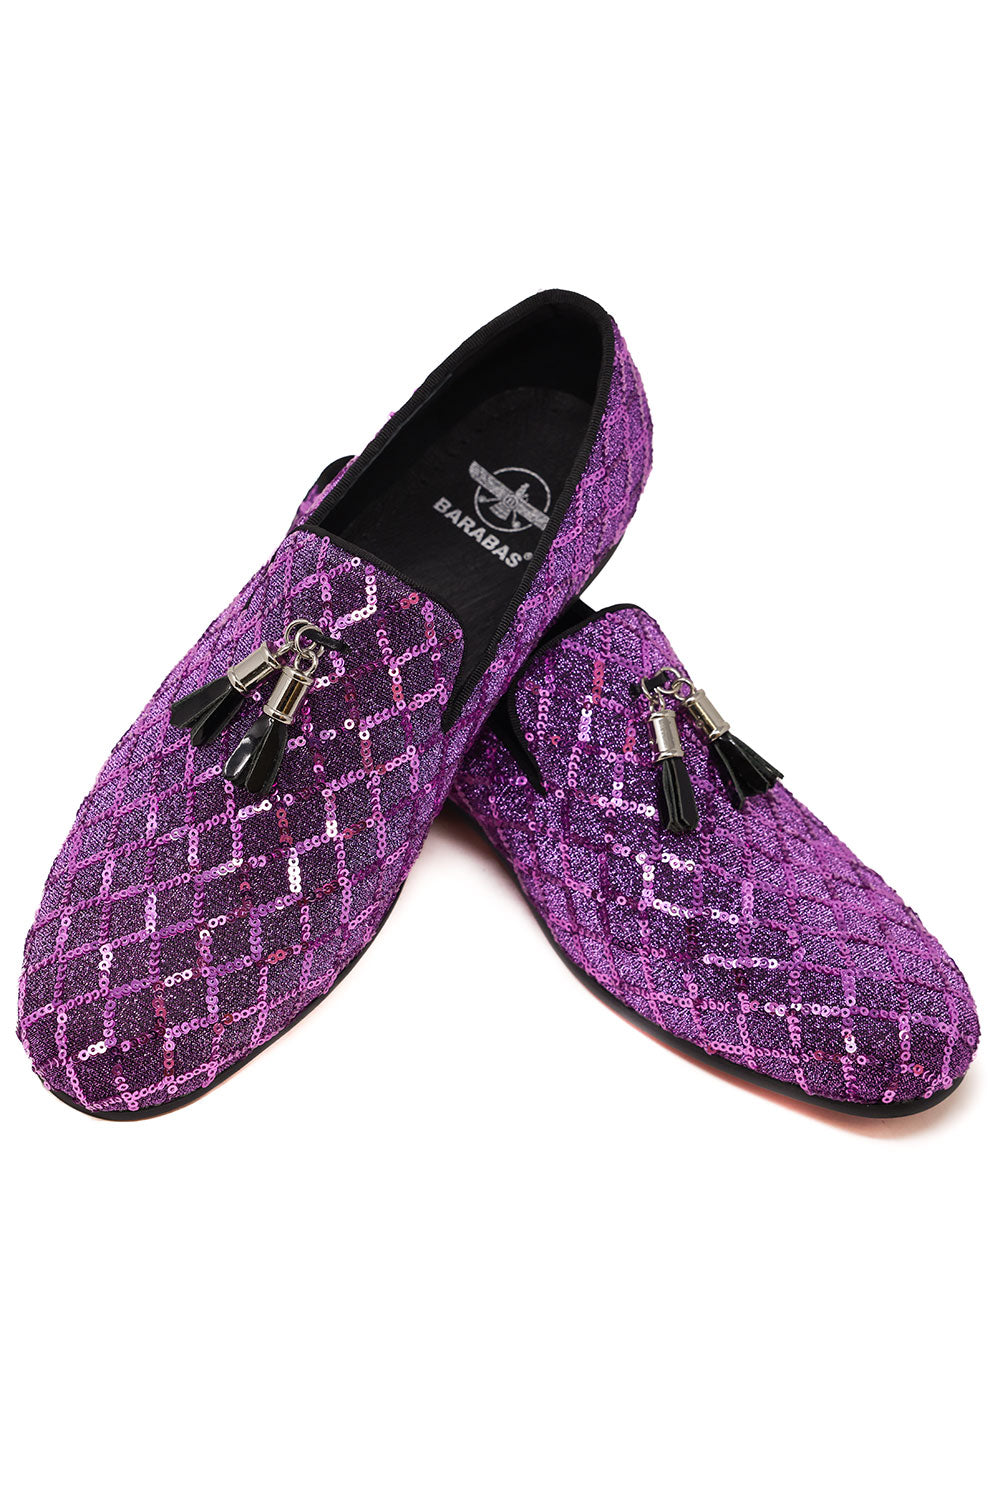 Barabas Men's Sequin Design Tassel Slip On Loafer Shoes 2SH3099 Purple